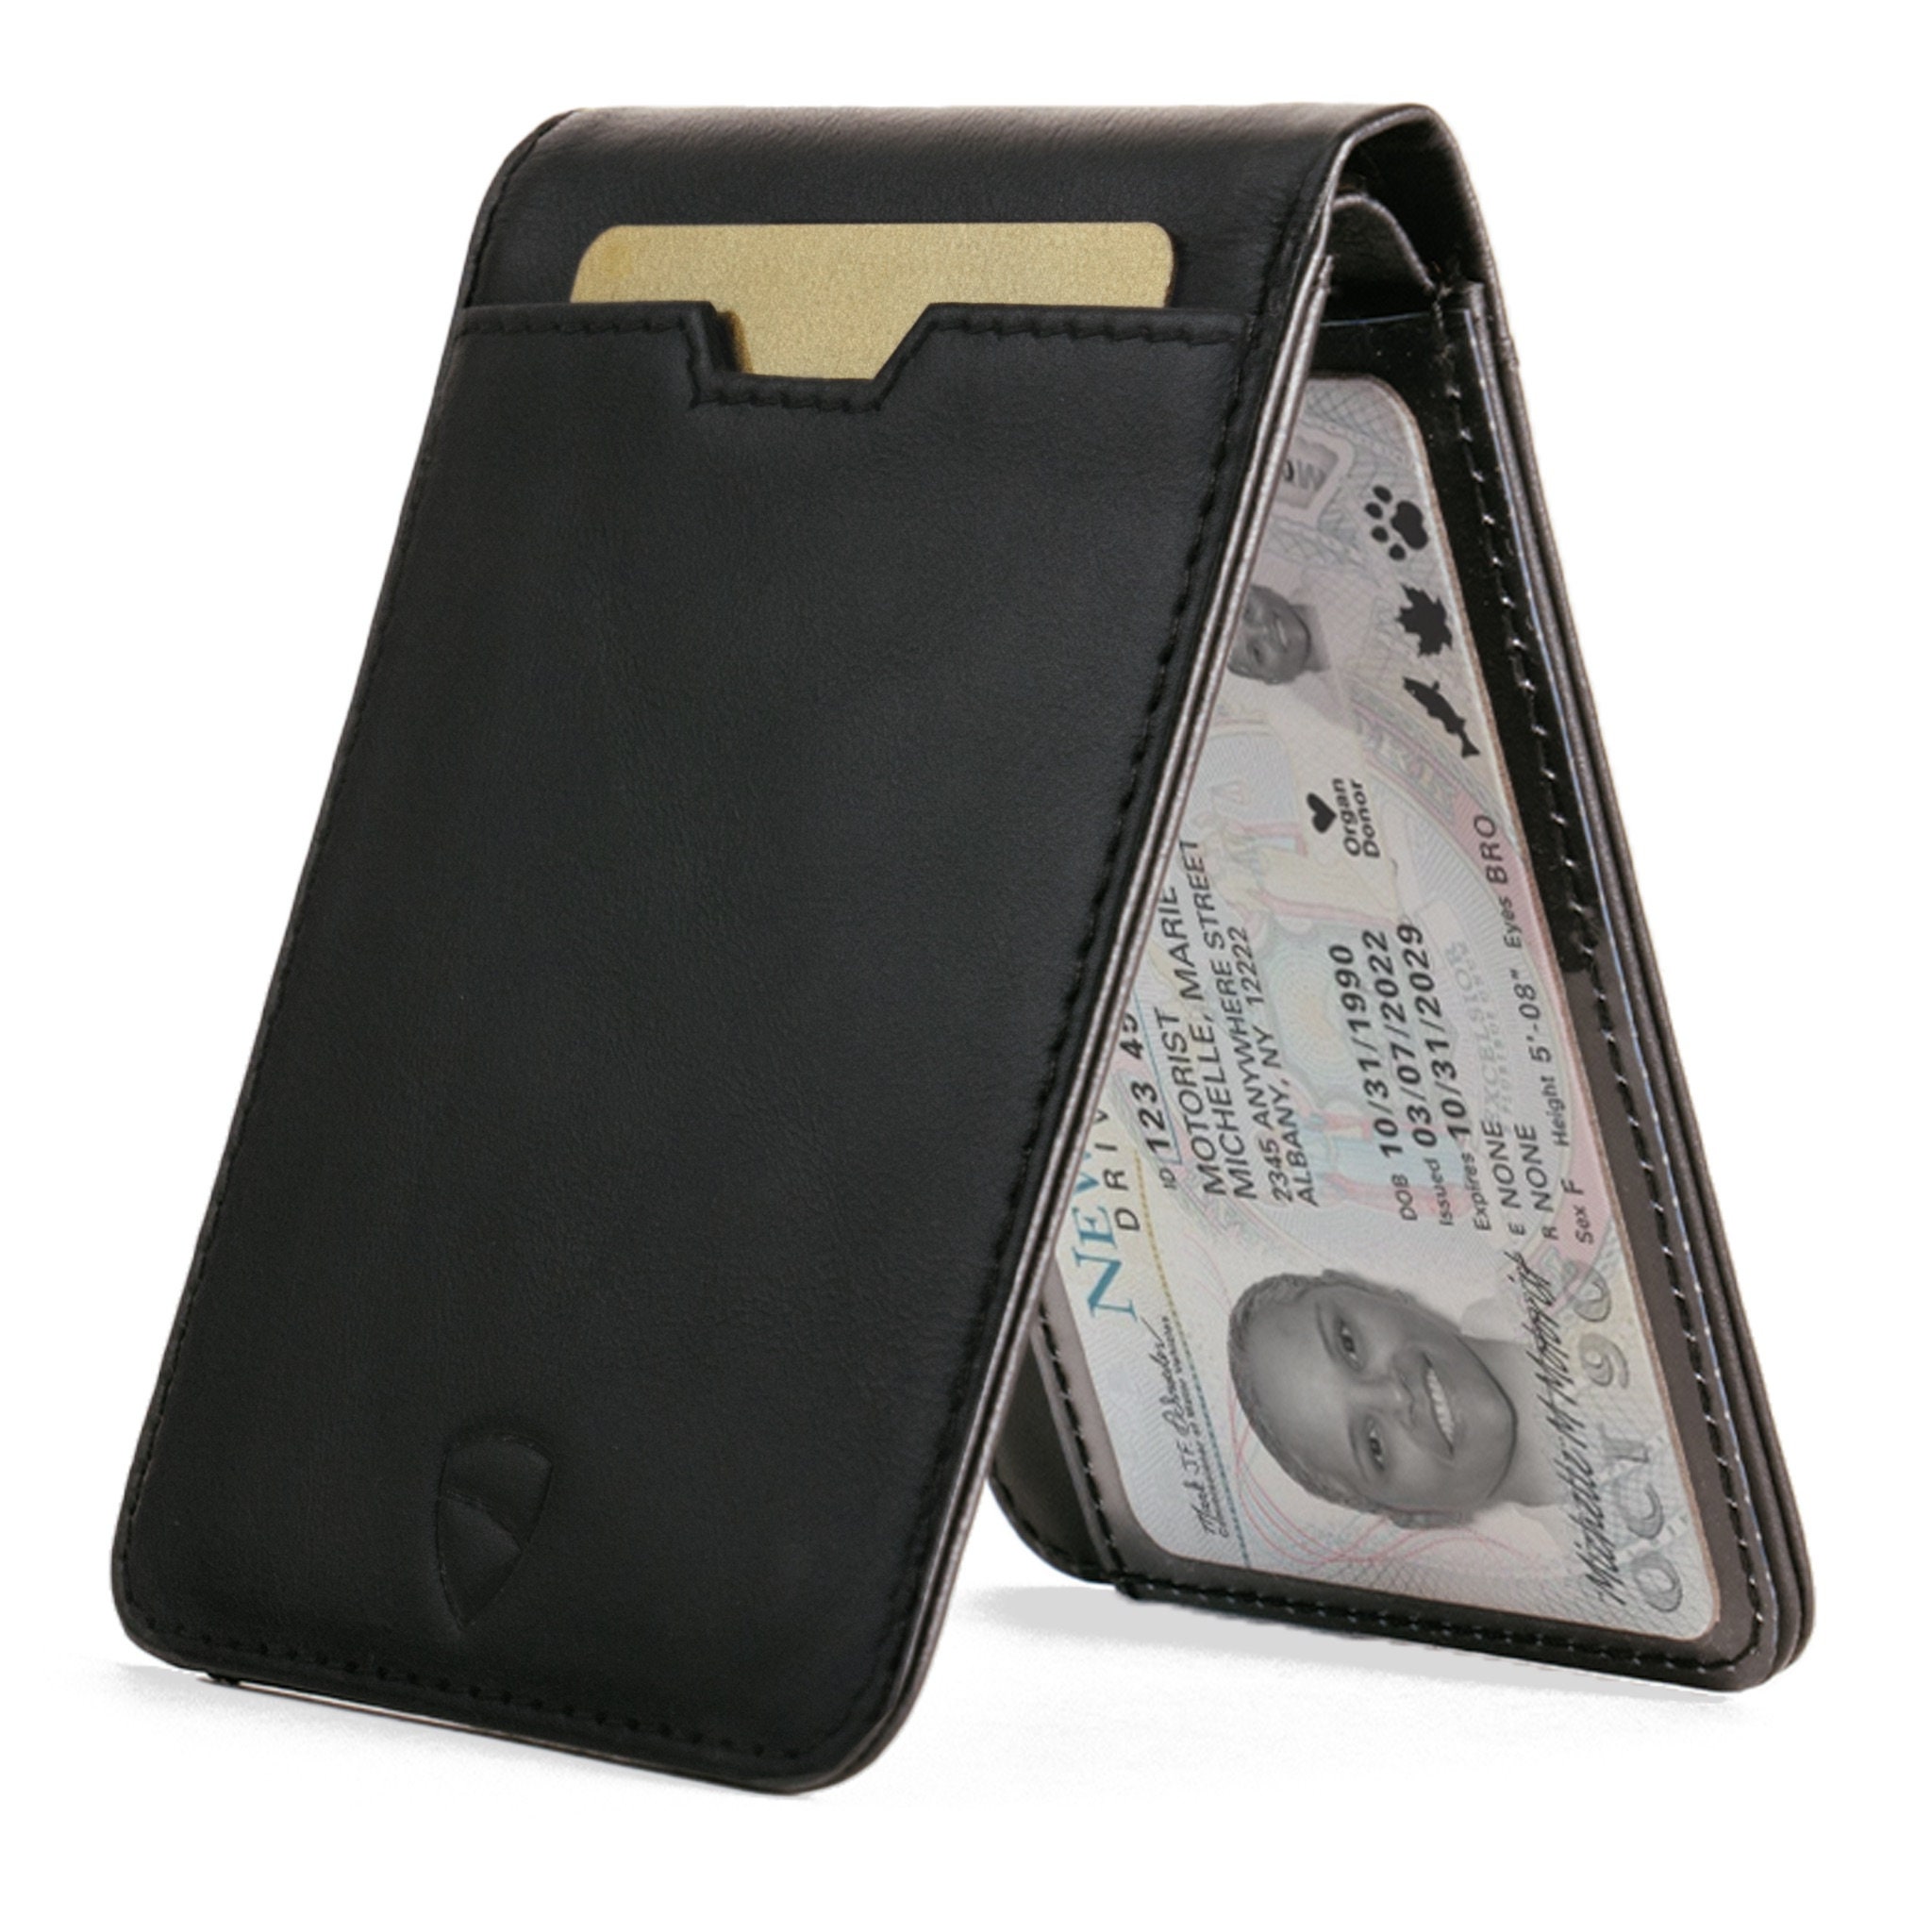 Vaultskin Belgravia - Leather Zipper Wallet with RFID Blocking Black